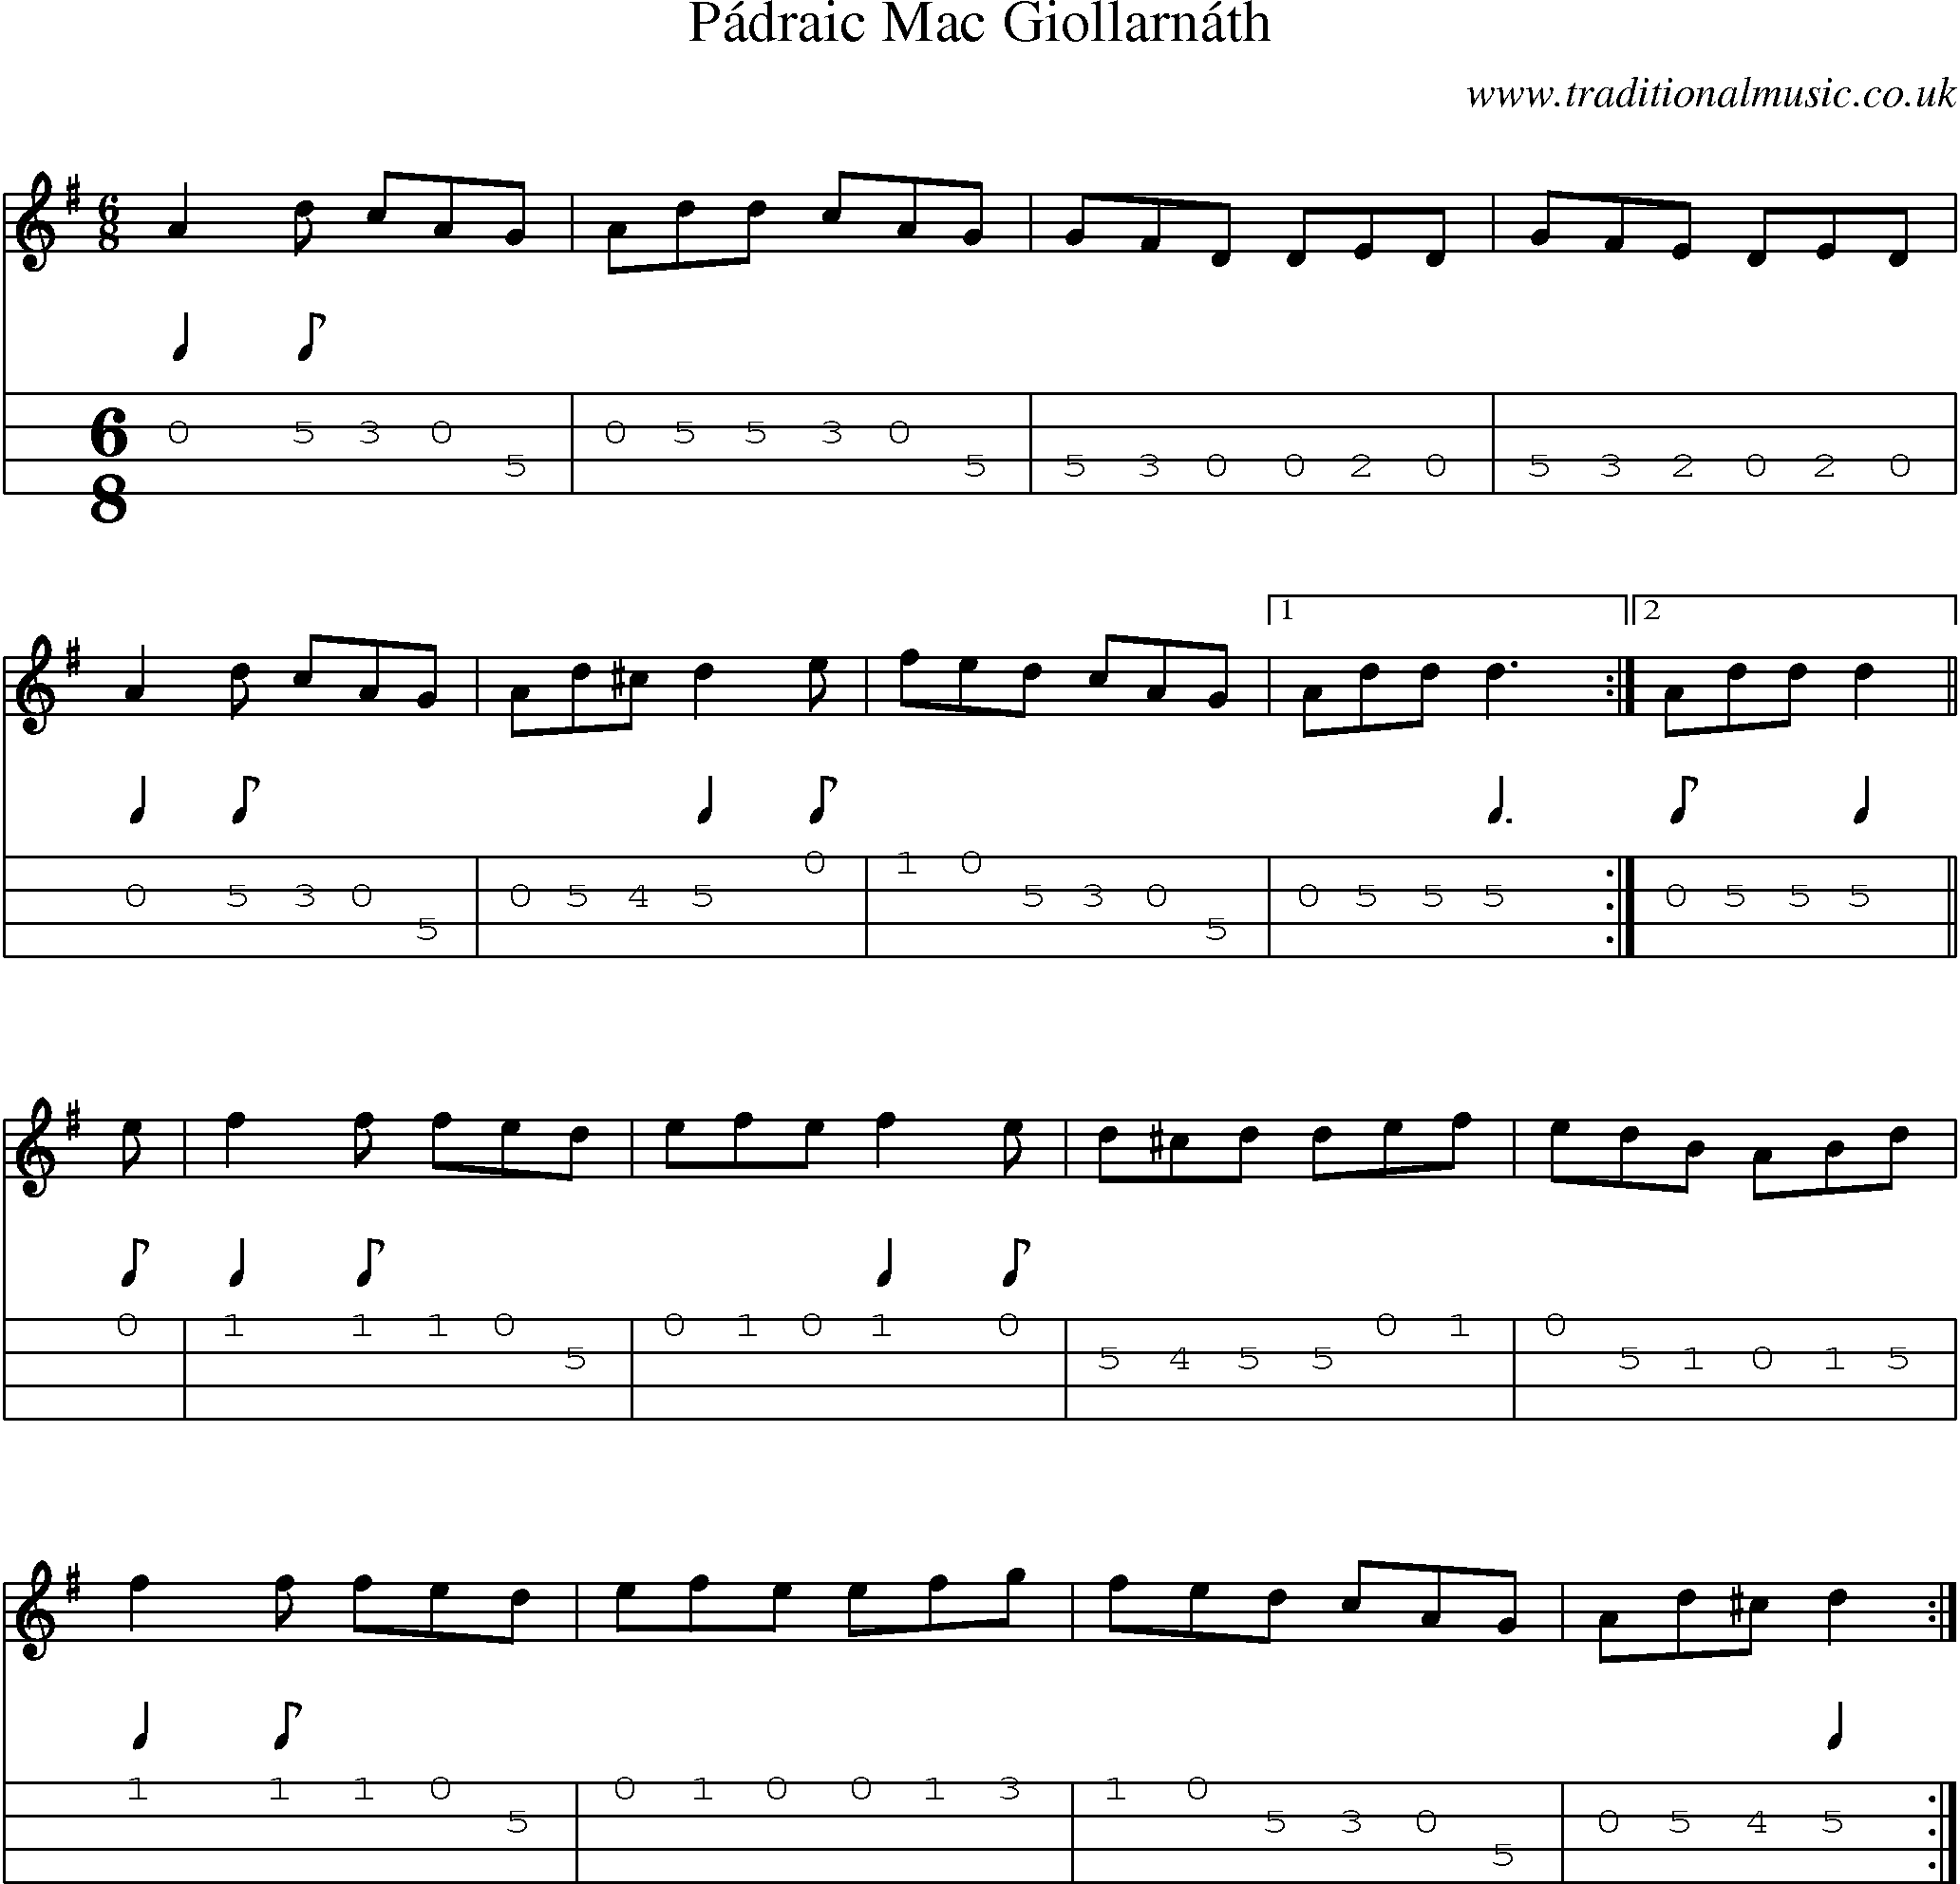 Music Score and Mandolin Tabs for Padraic Mac Giollarnath